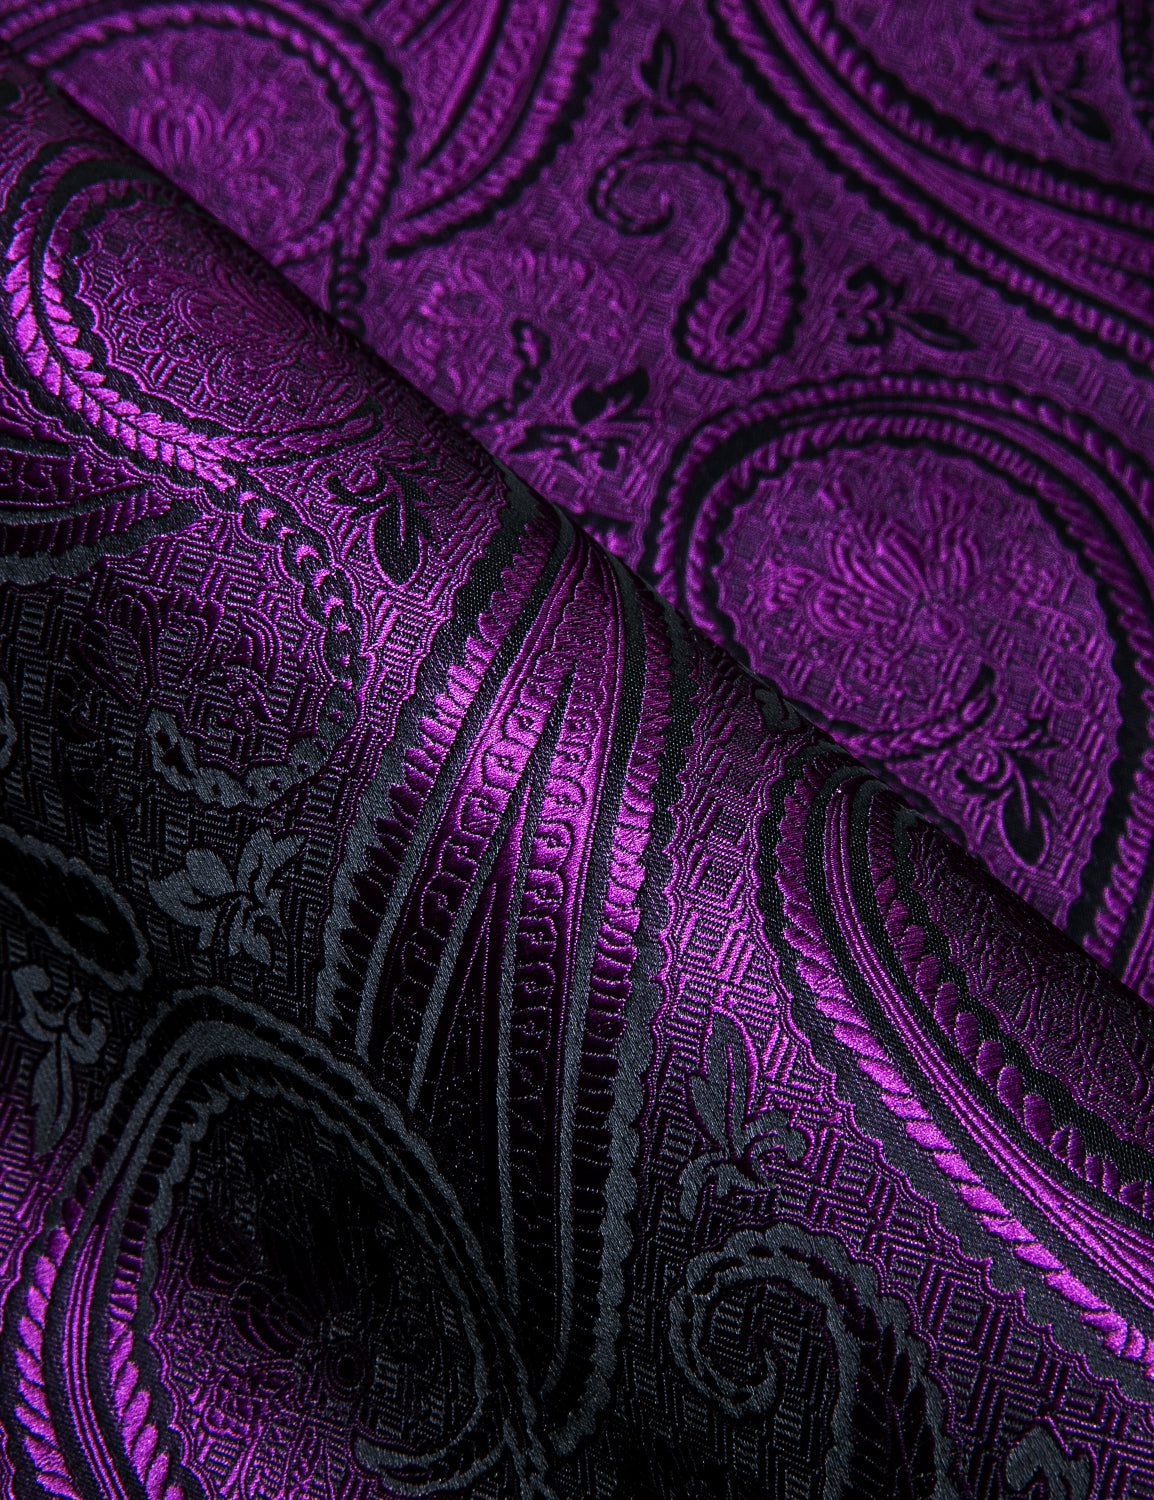 Novelty Silky Shirt - Purple Swirl